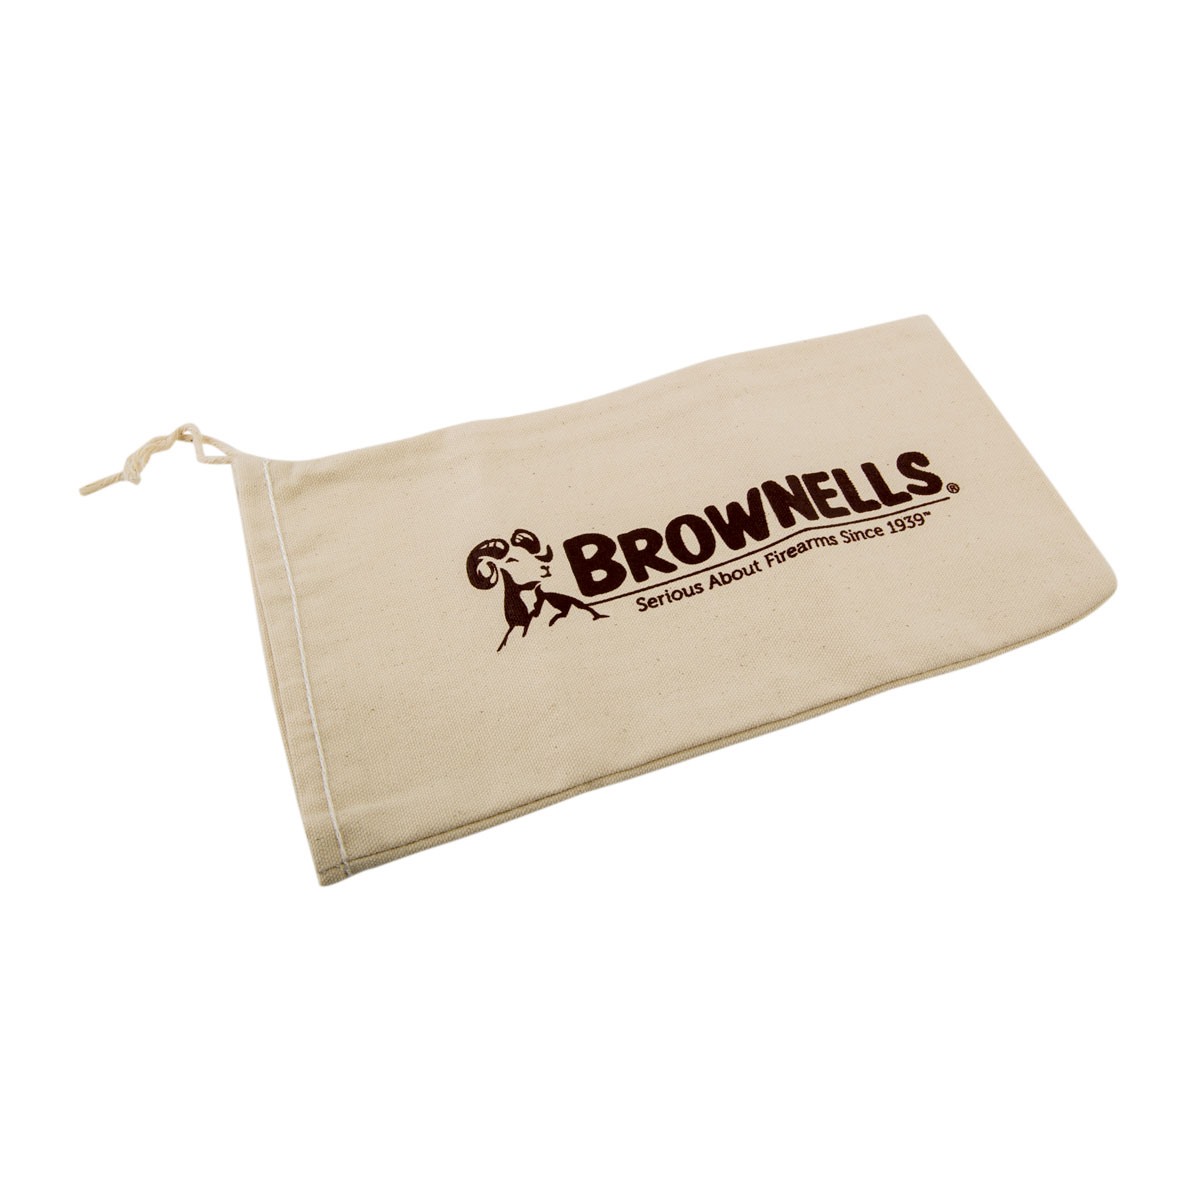 BROWNELLS CANVAS SHOOTING BAGS | Brownells